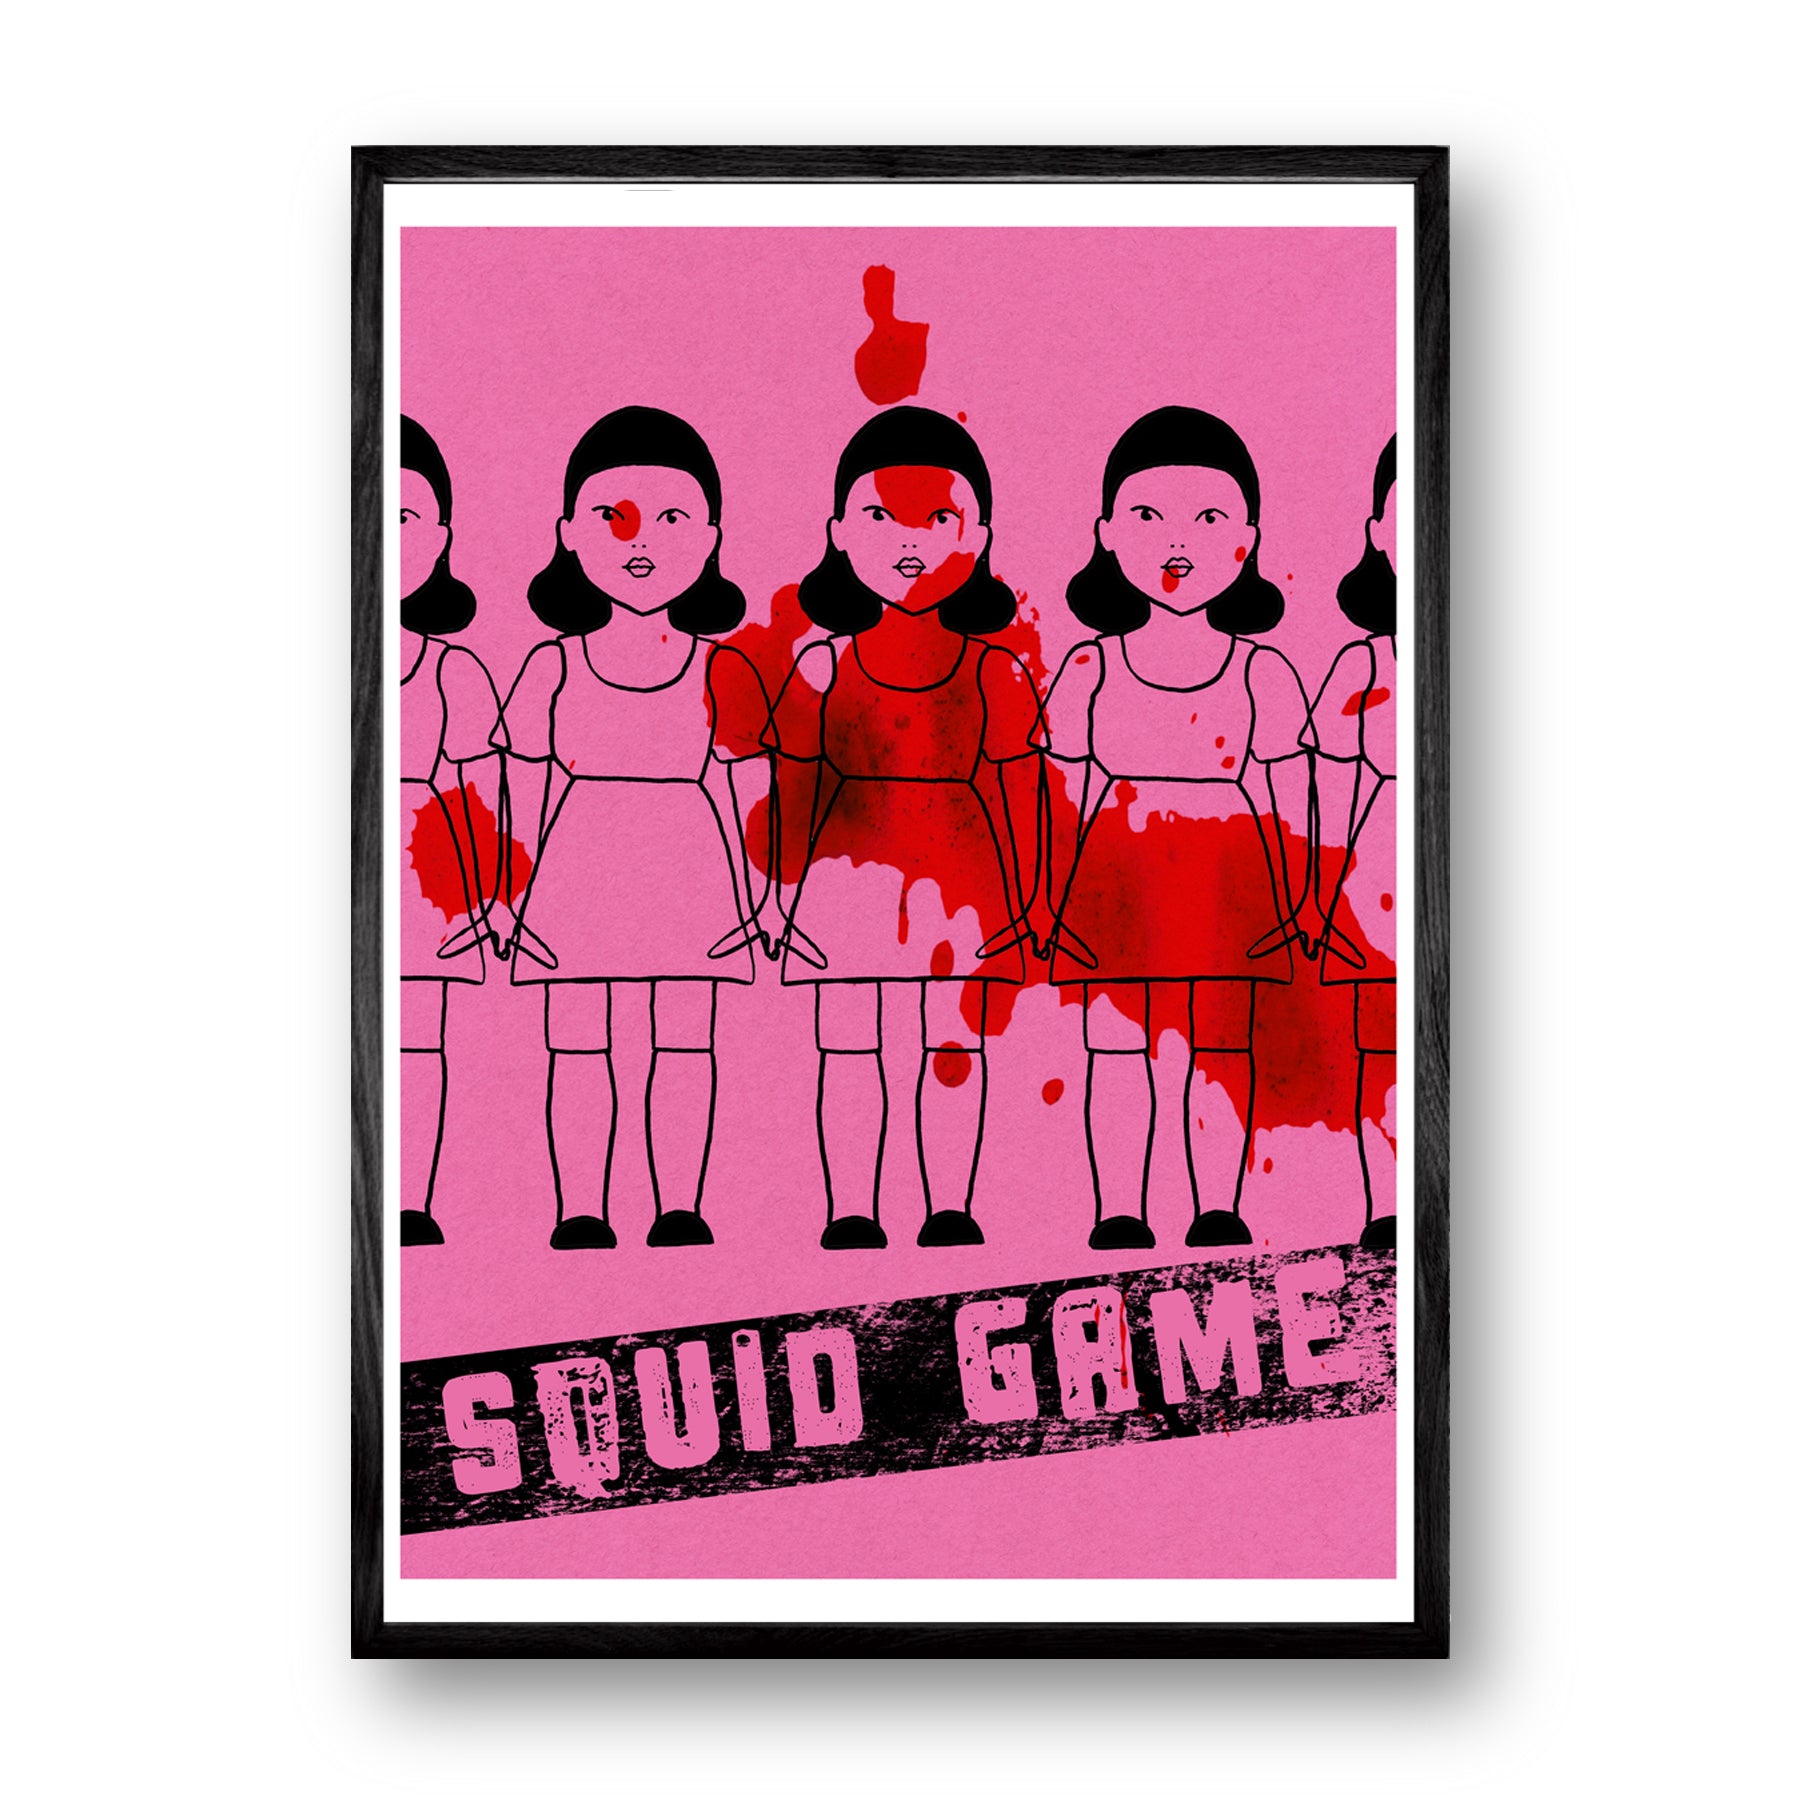 SQUID GAME - Pôster Assinado